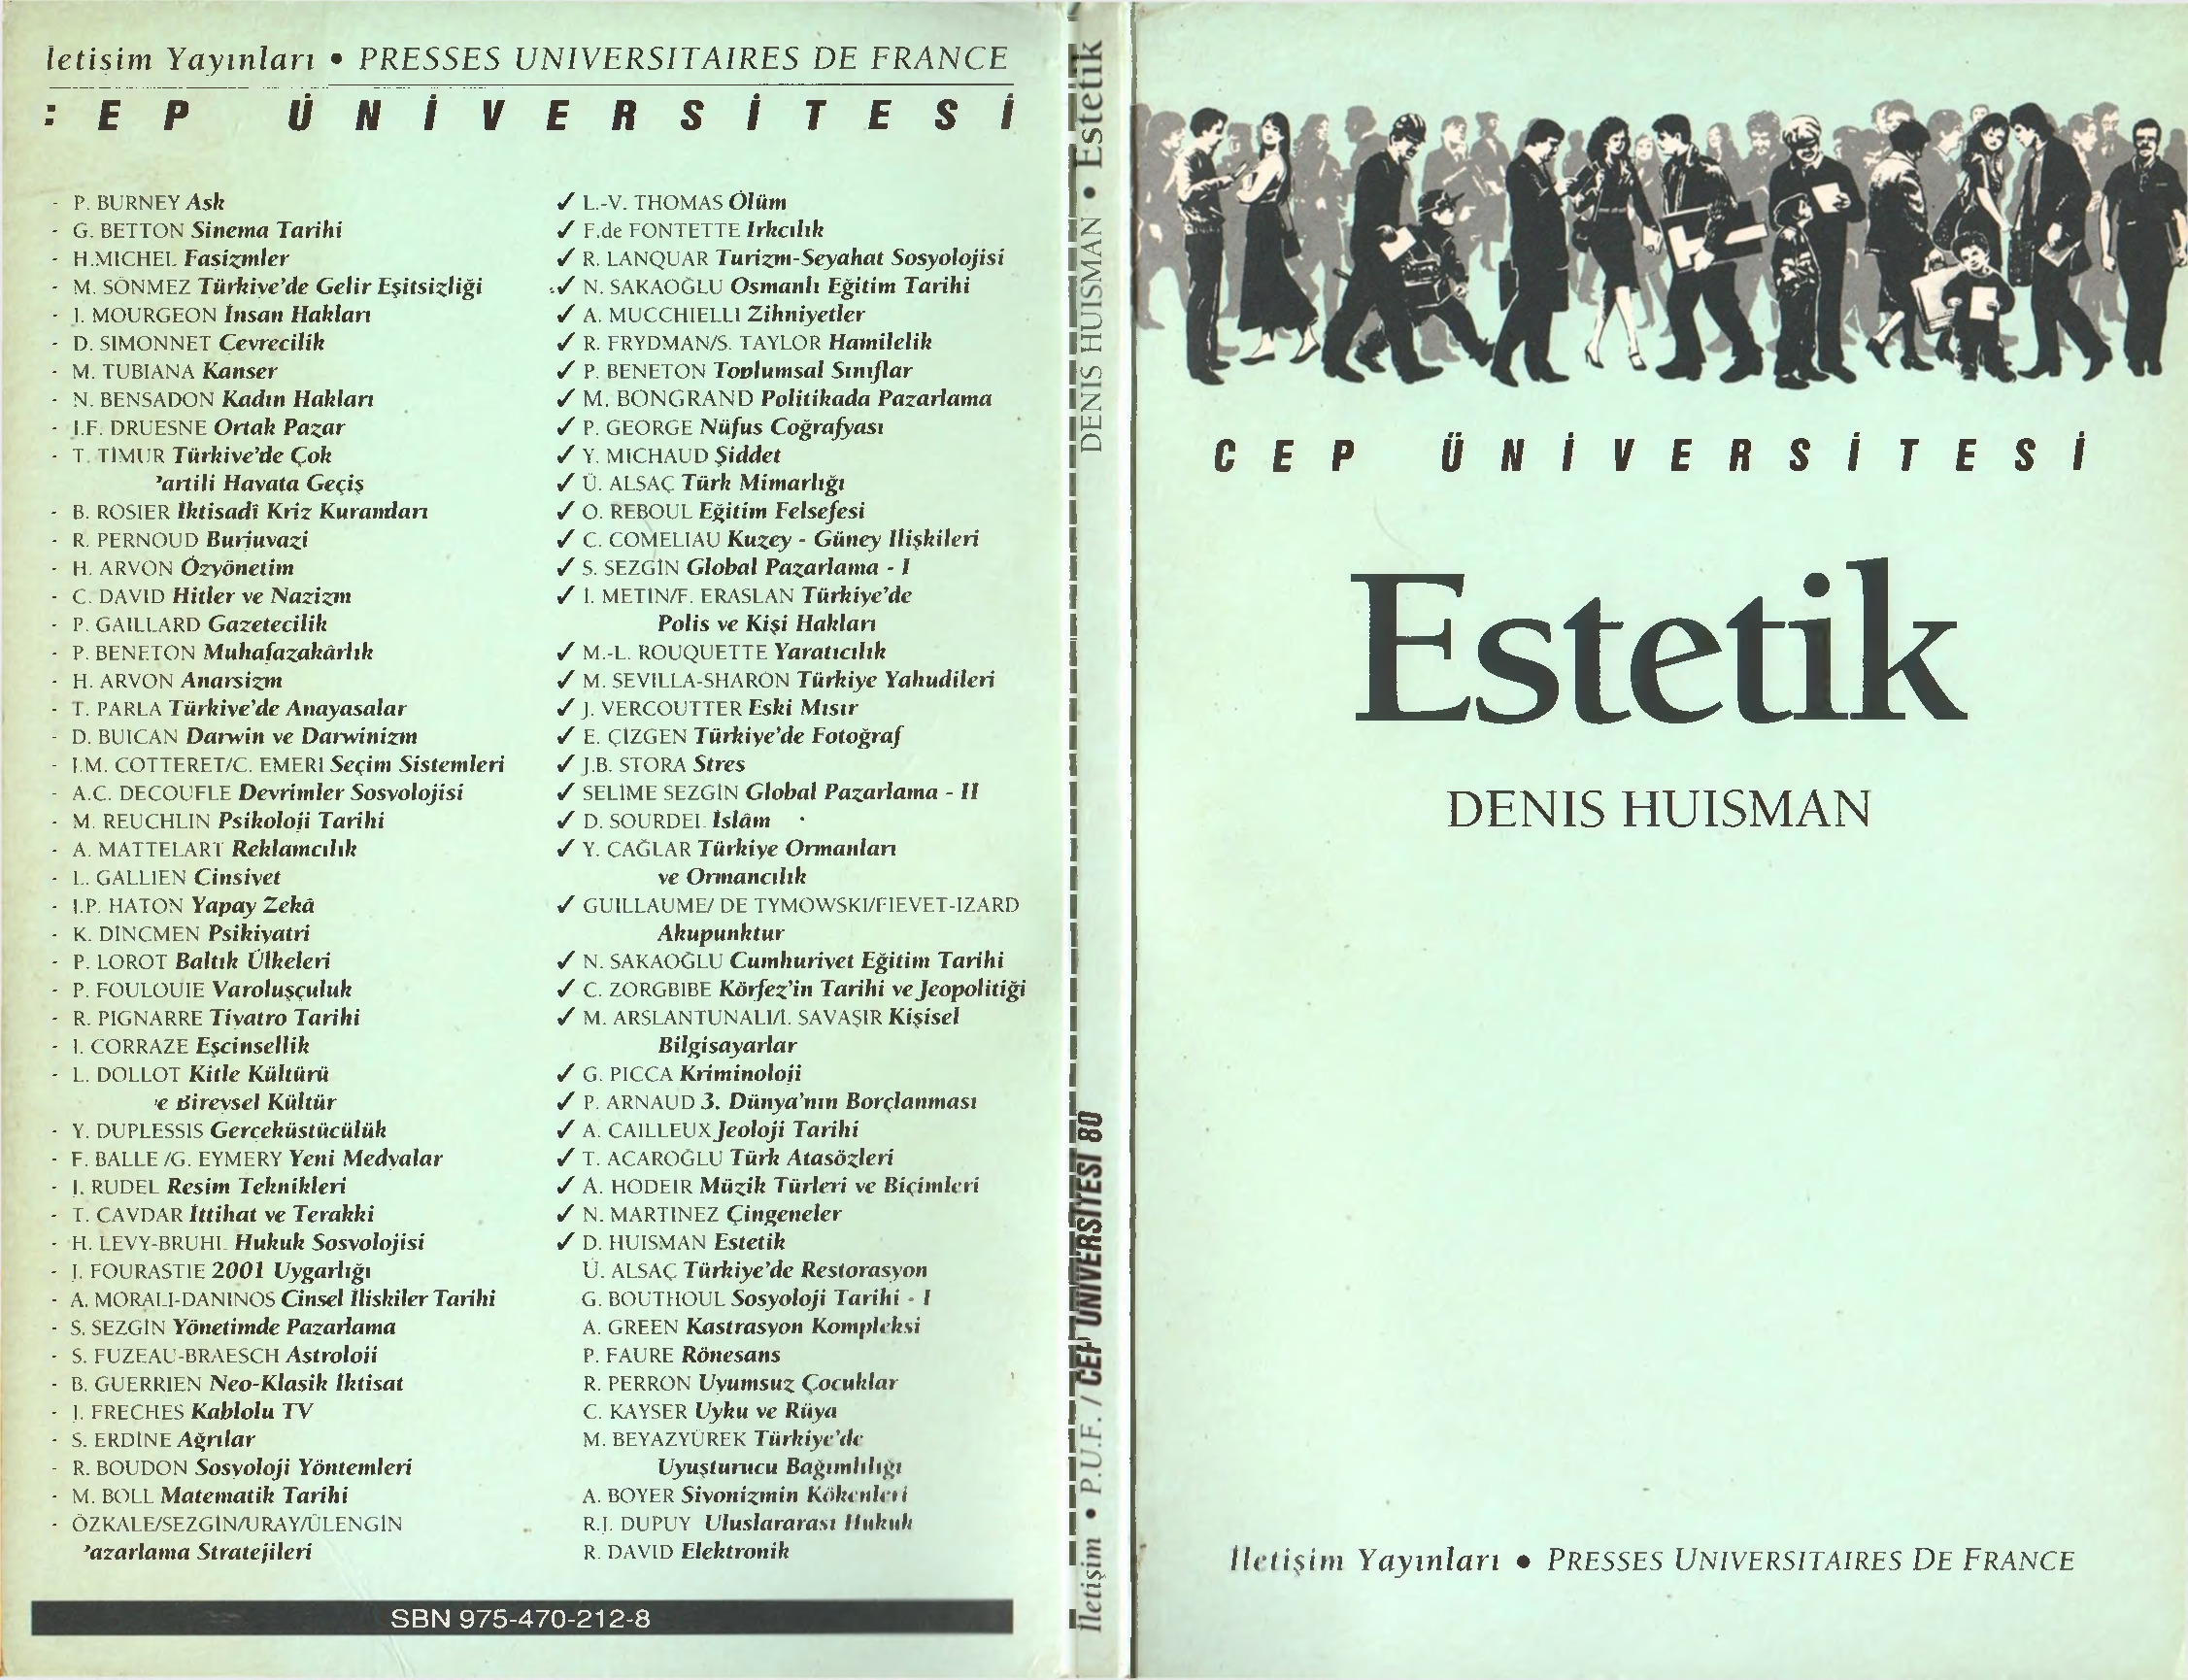 Istetik-Denis Huisman-Cem Muxdaroğlu-1992-69s